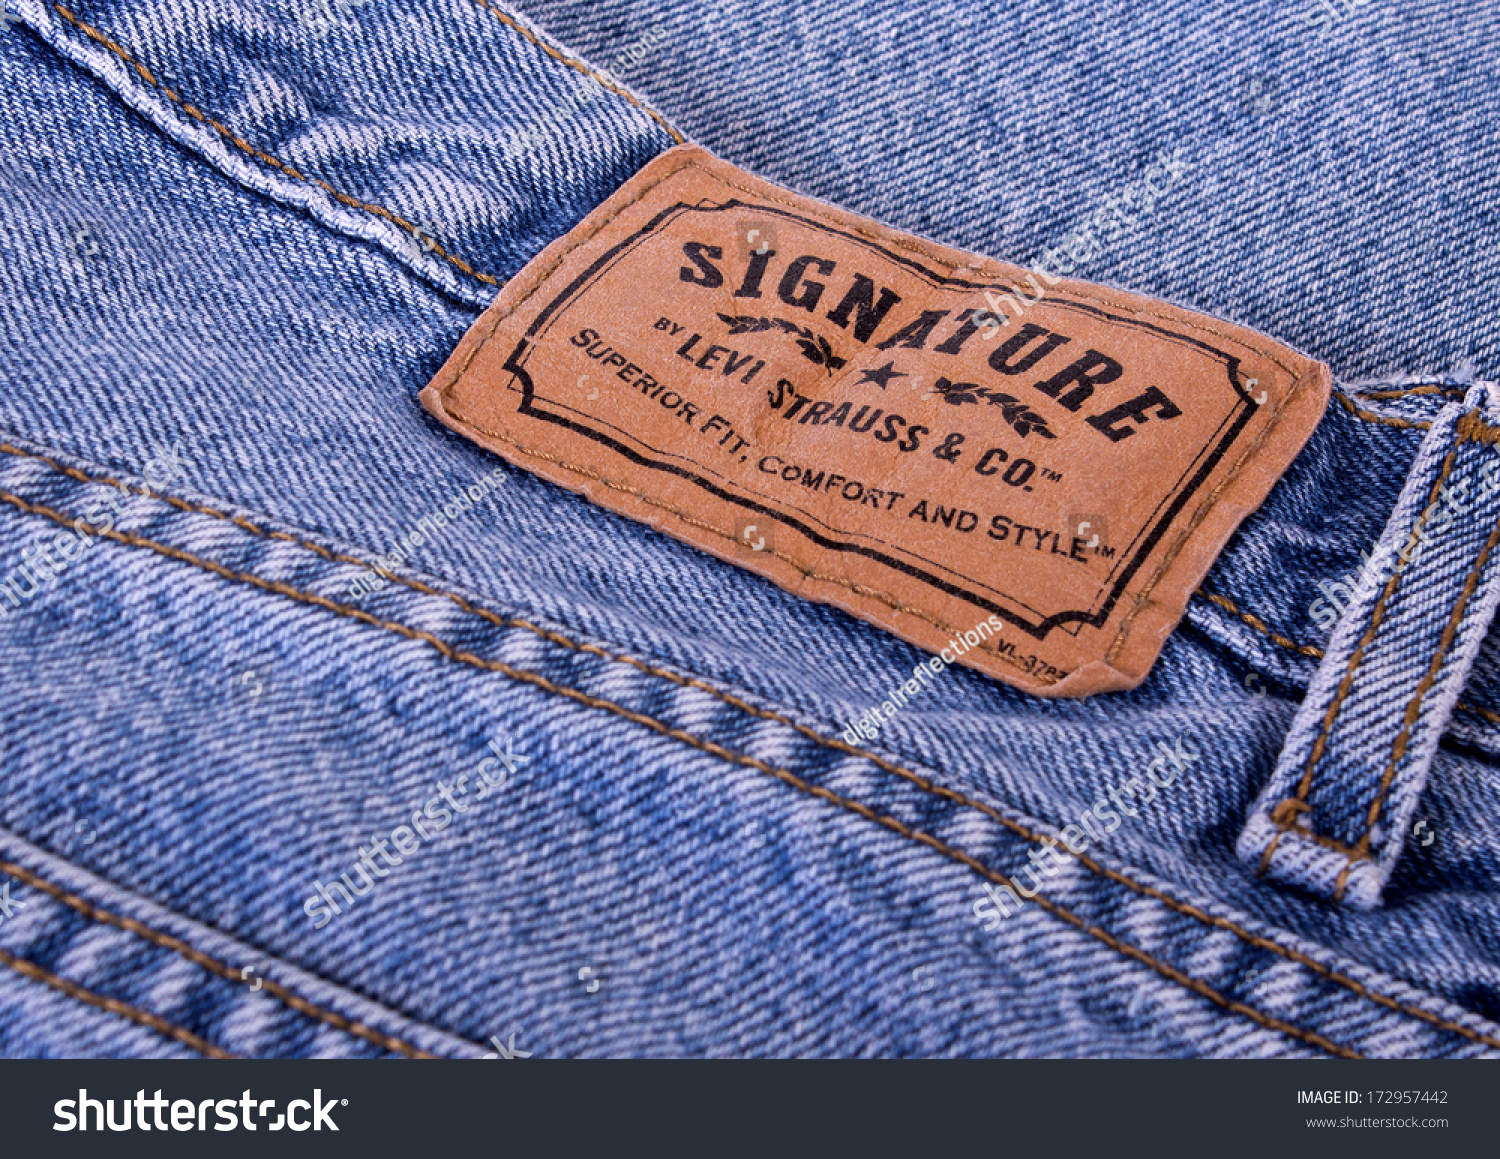 levis strauss signature jeans